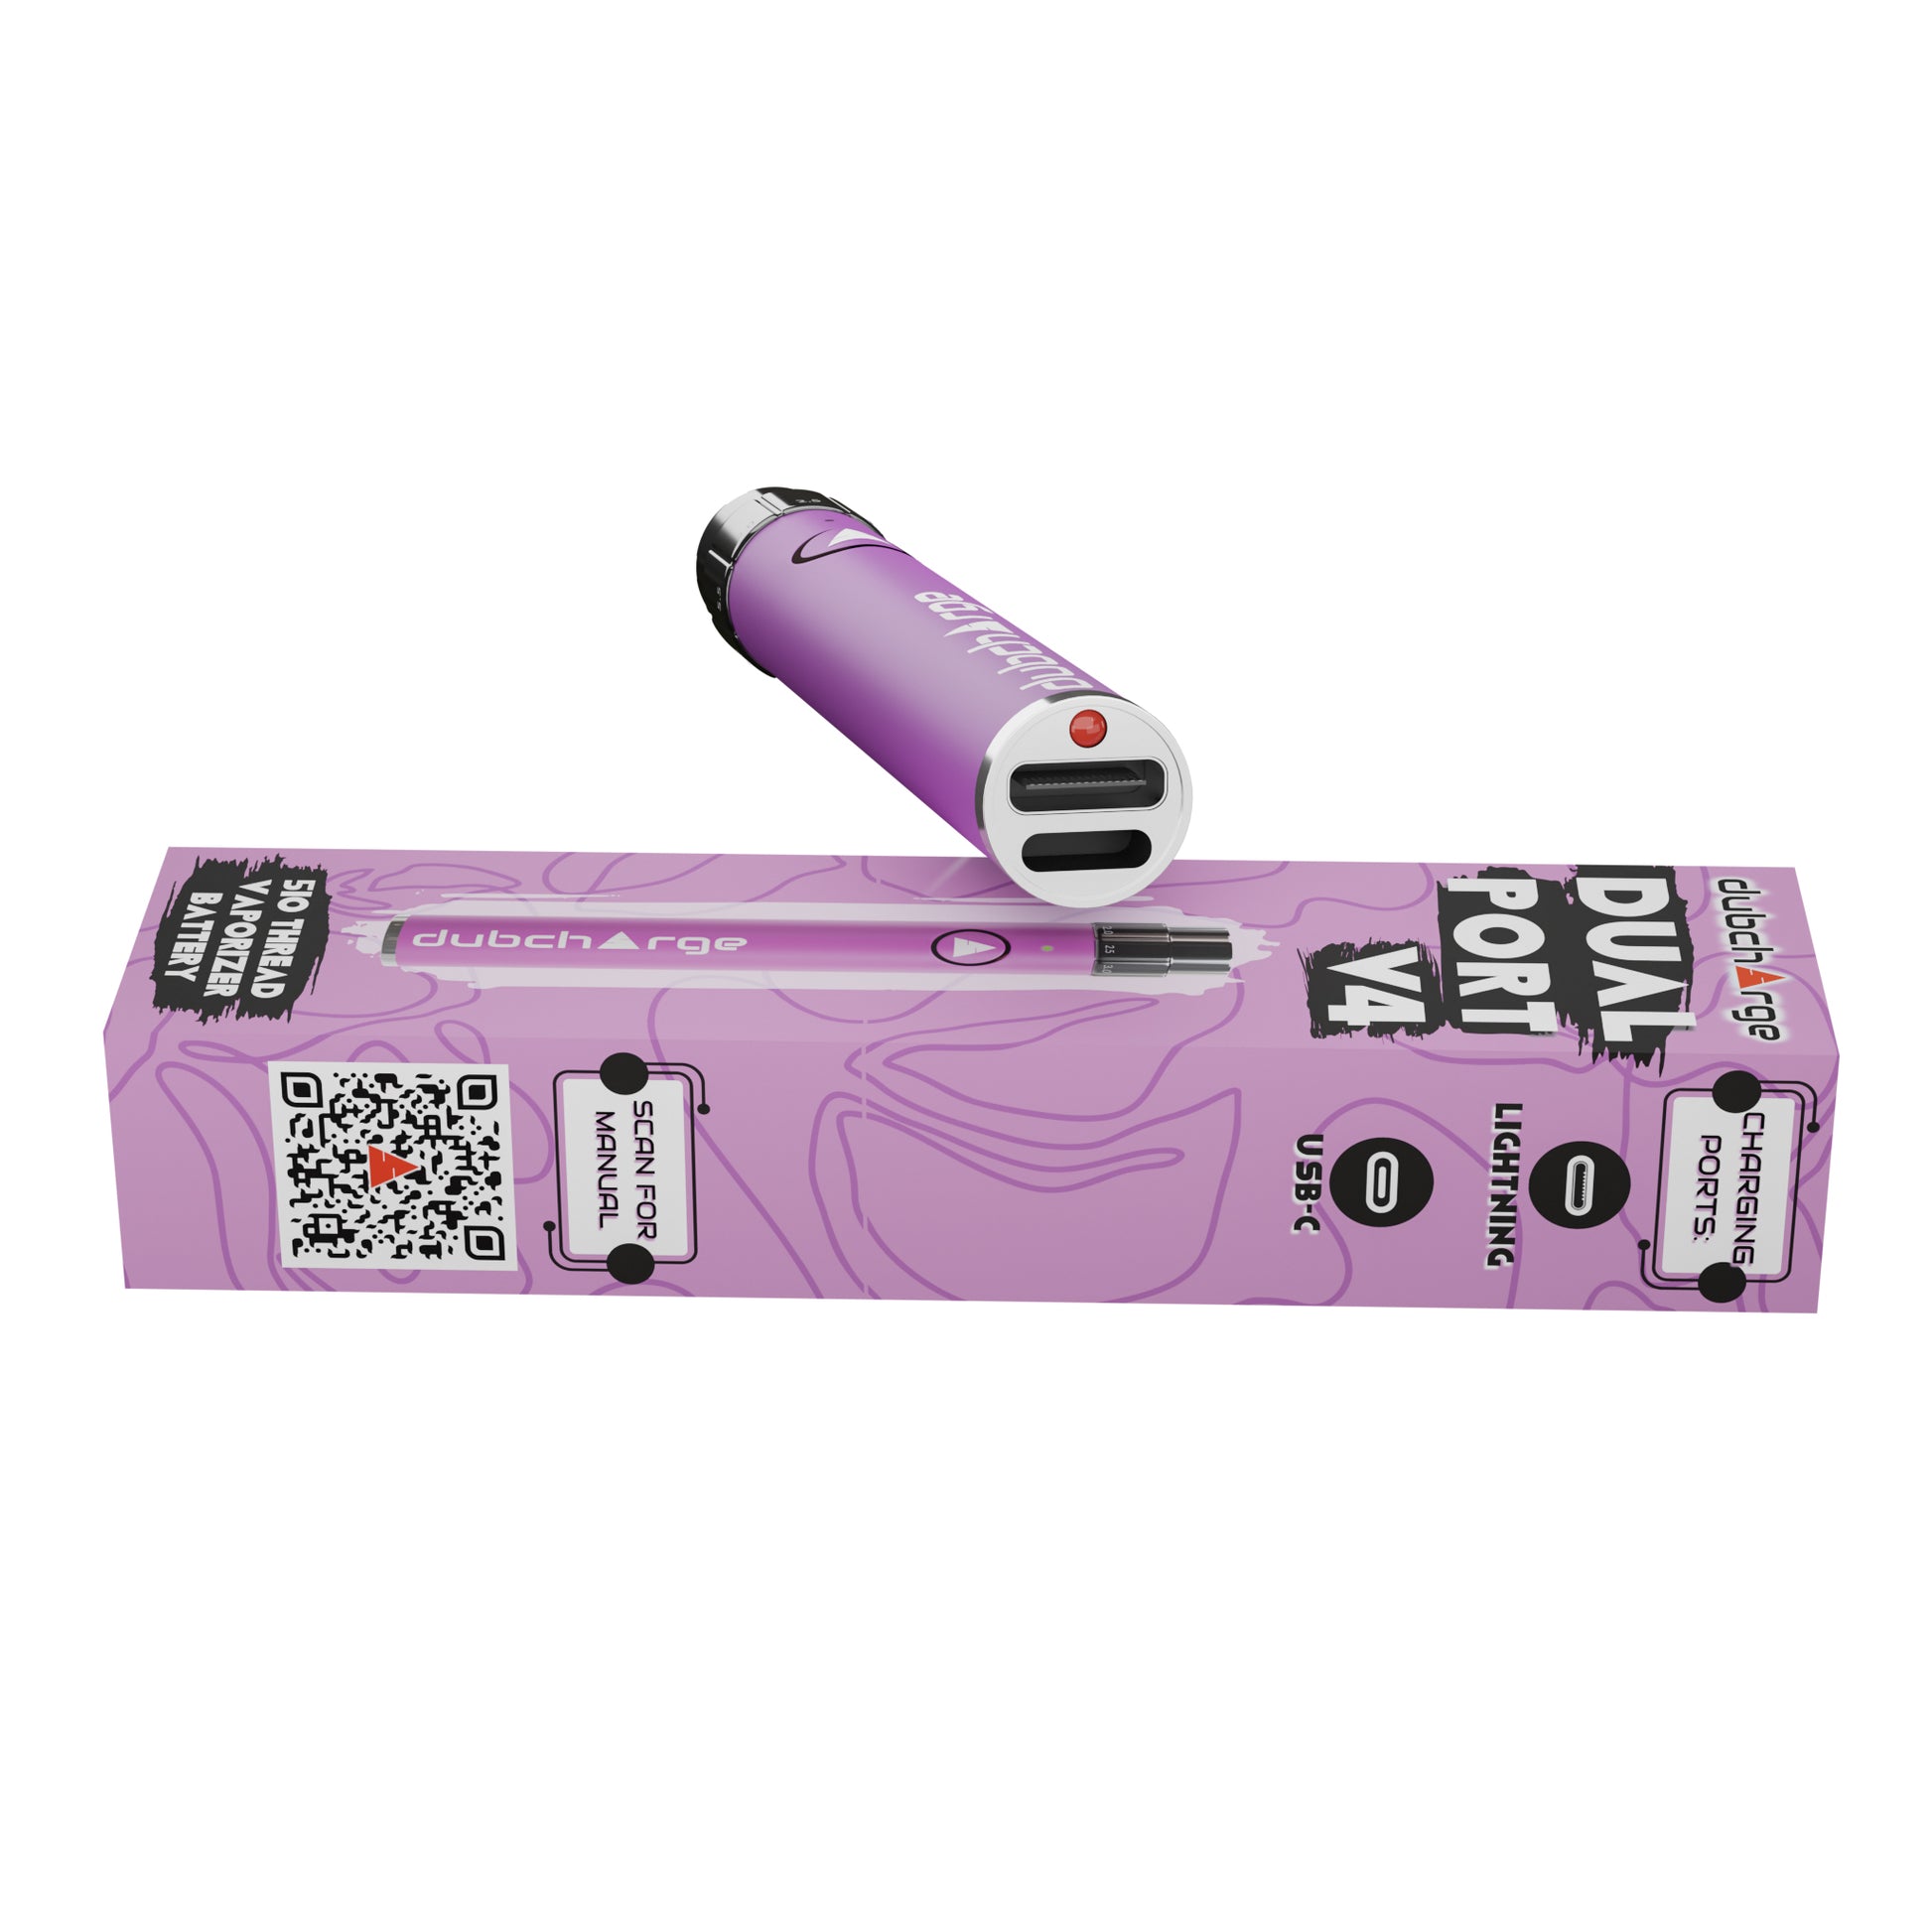 Cloud 8 - Twister - 900mah - 510 Thread Battery - 4 Temp - Pink